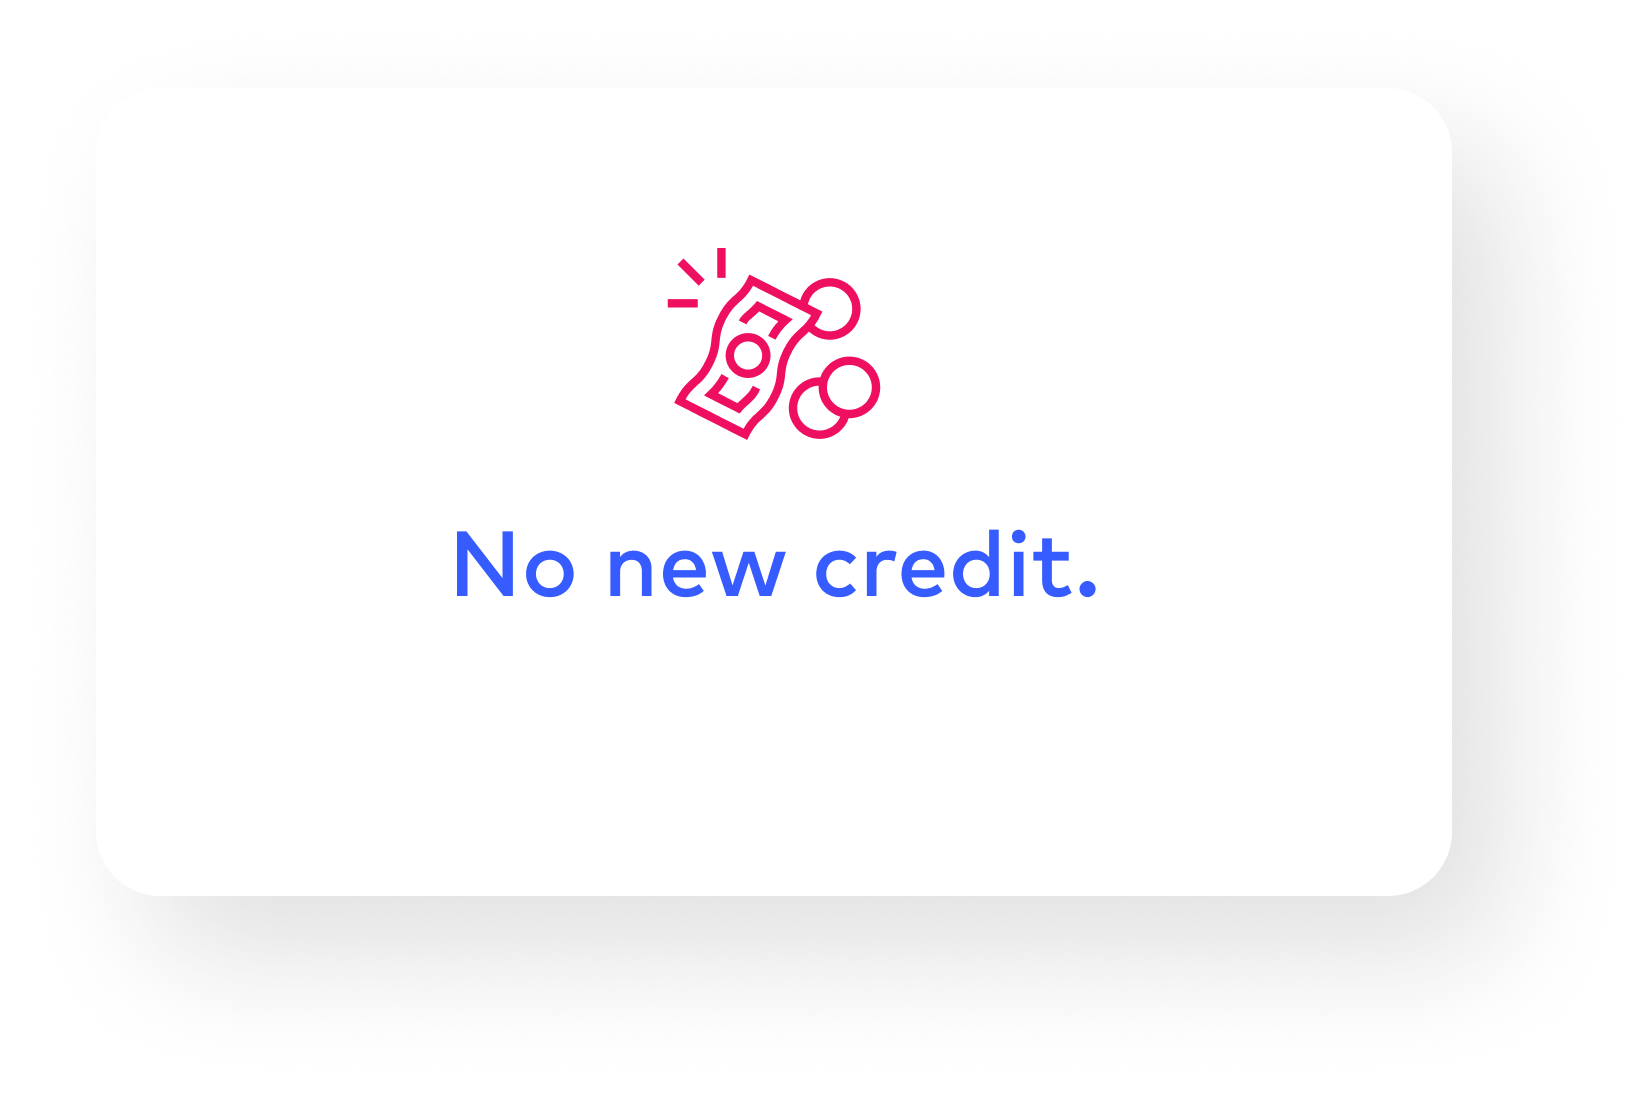 No application. No new credit